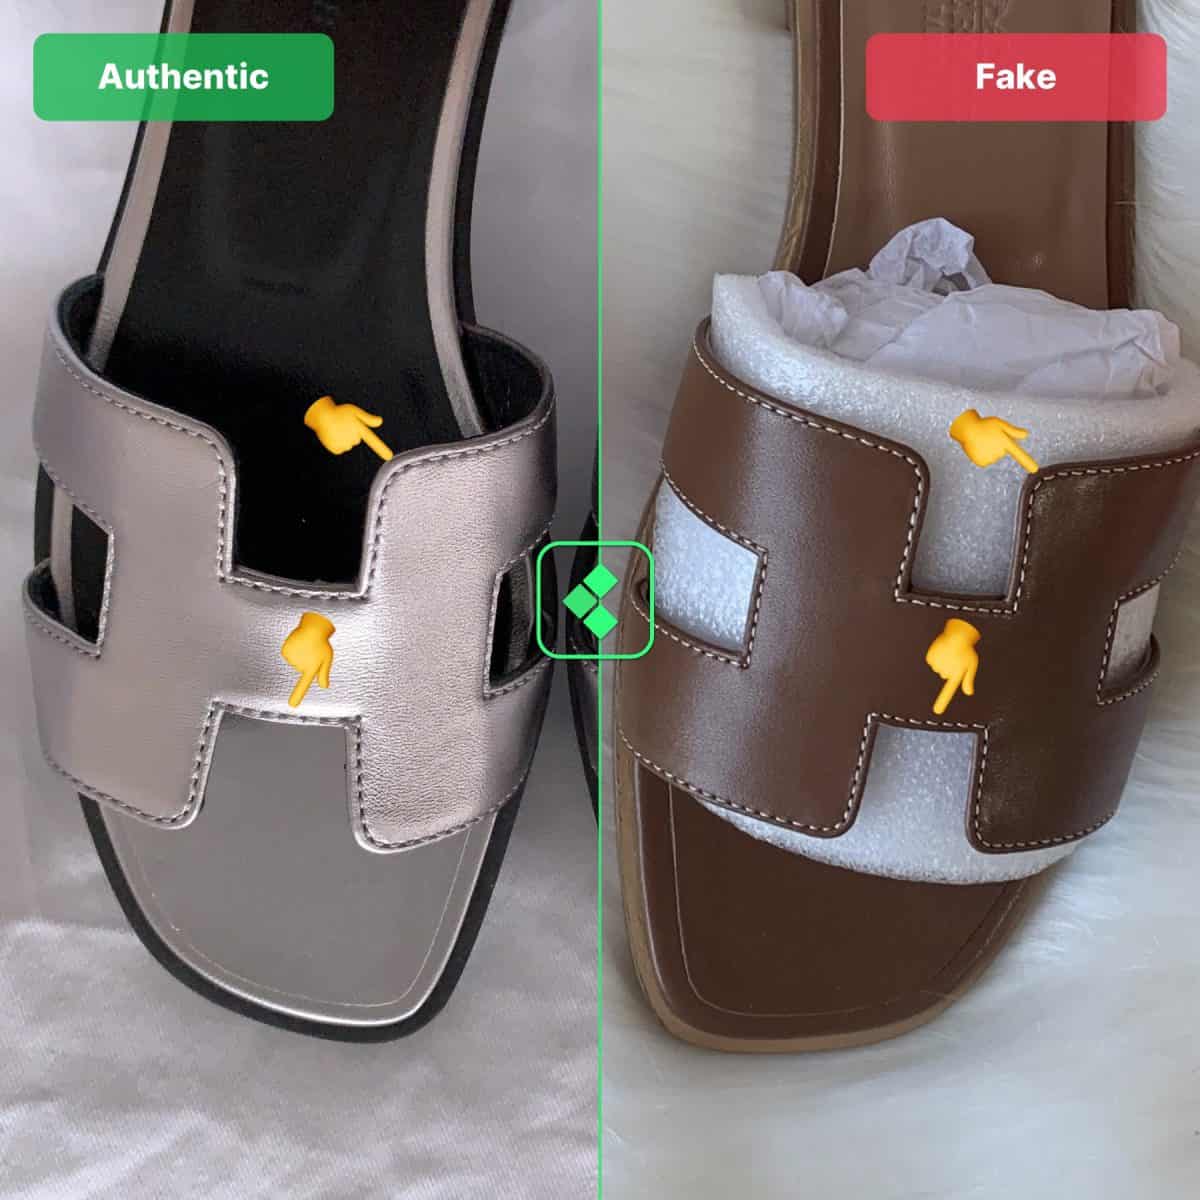 How to Spot Fake Hermes Sandals - Sandal Design